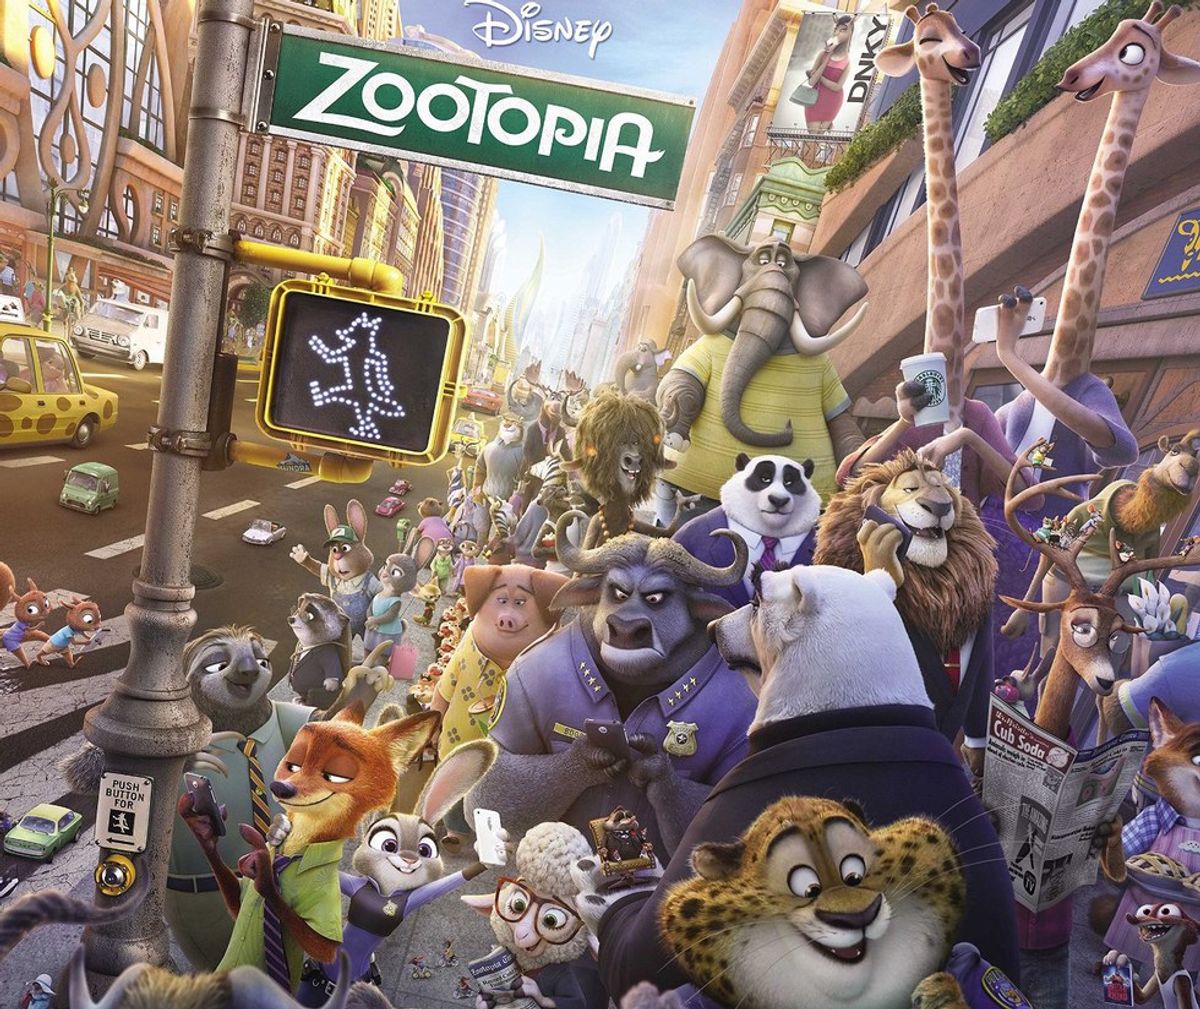 Disney's Animated Film 'Zootopia' Challenges the Social Machine